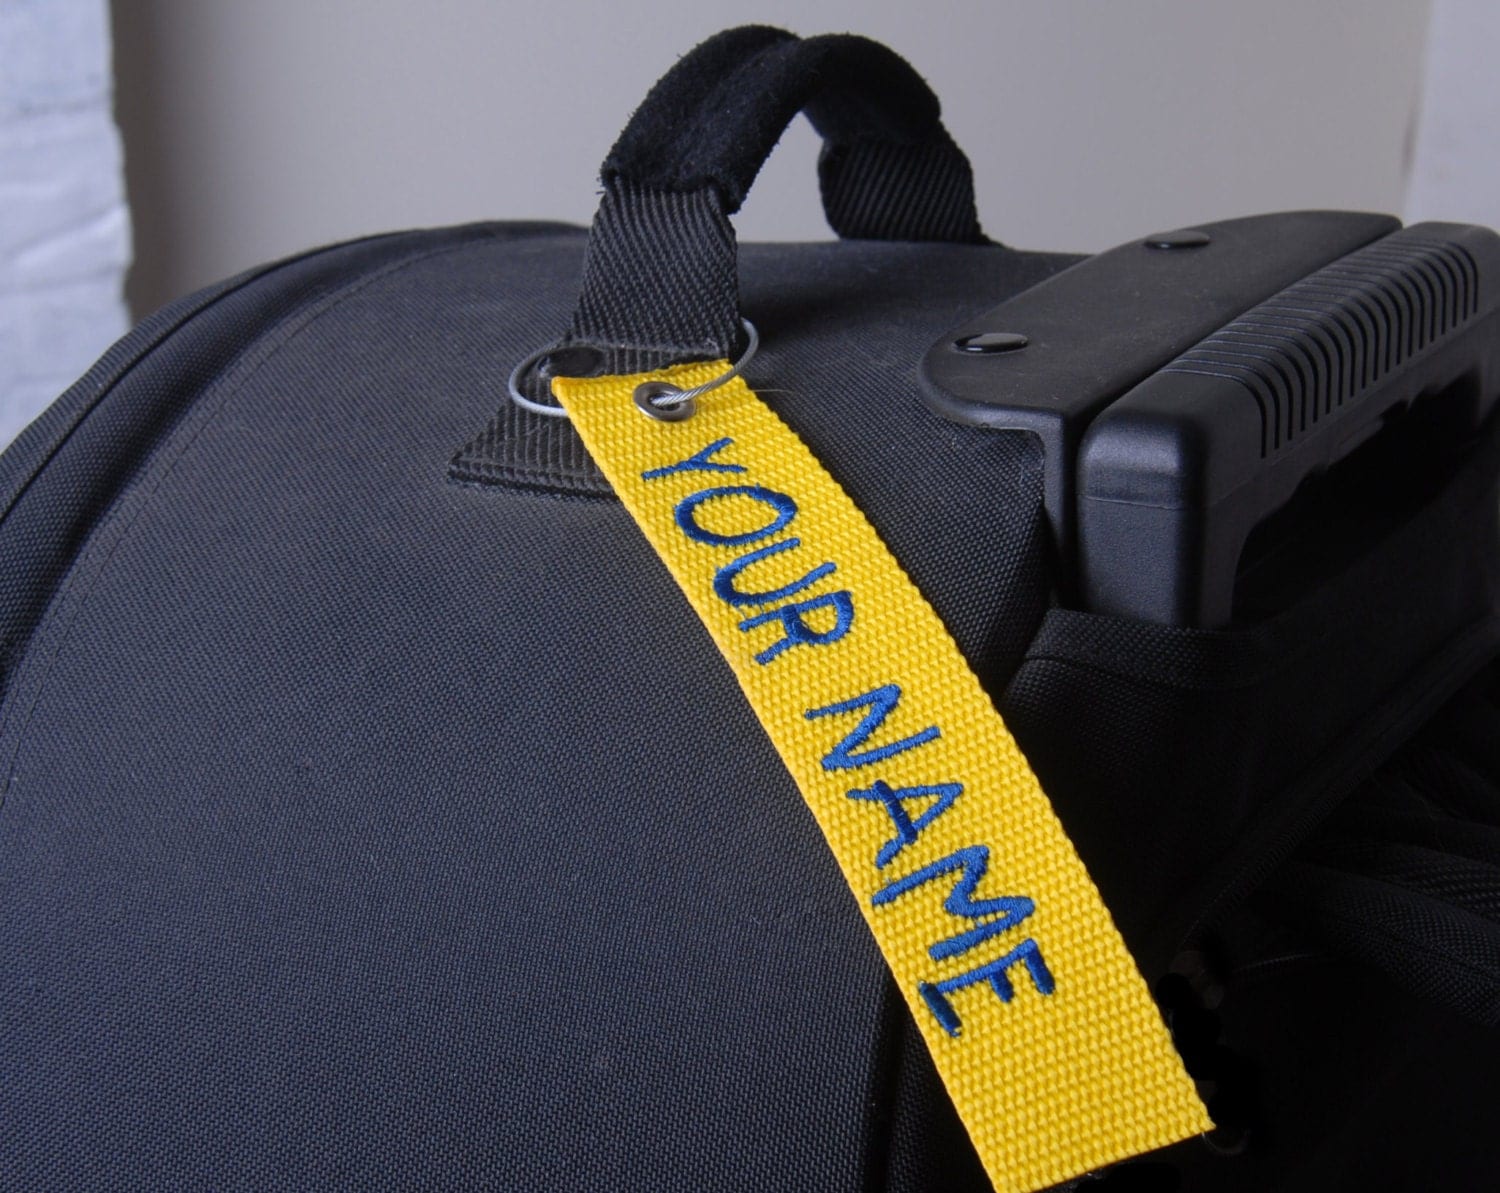 monogrammed luggage tags